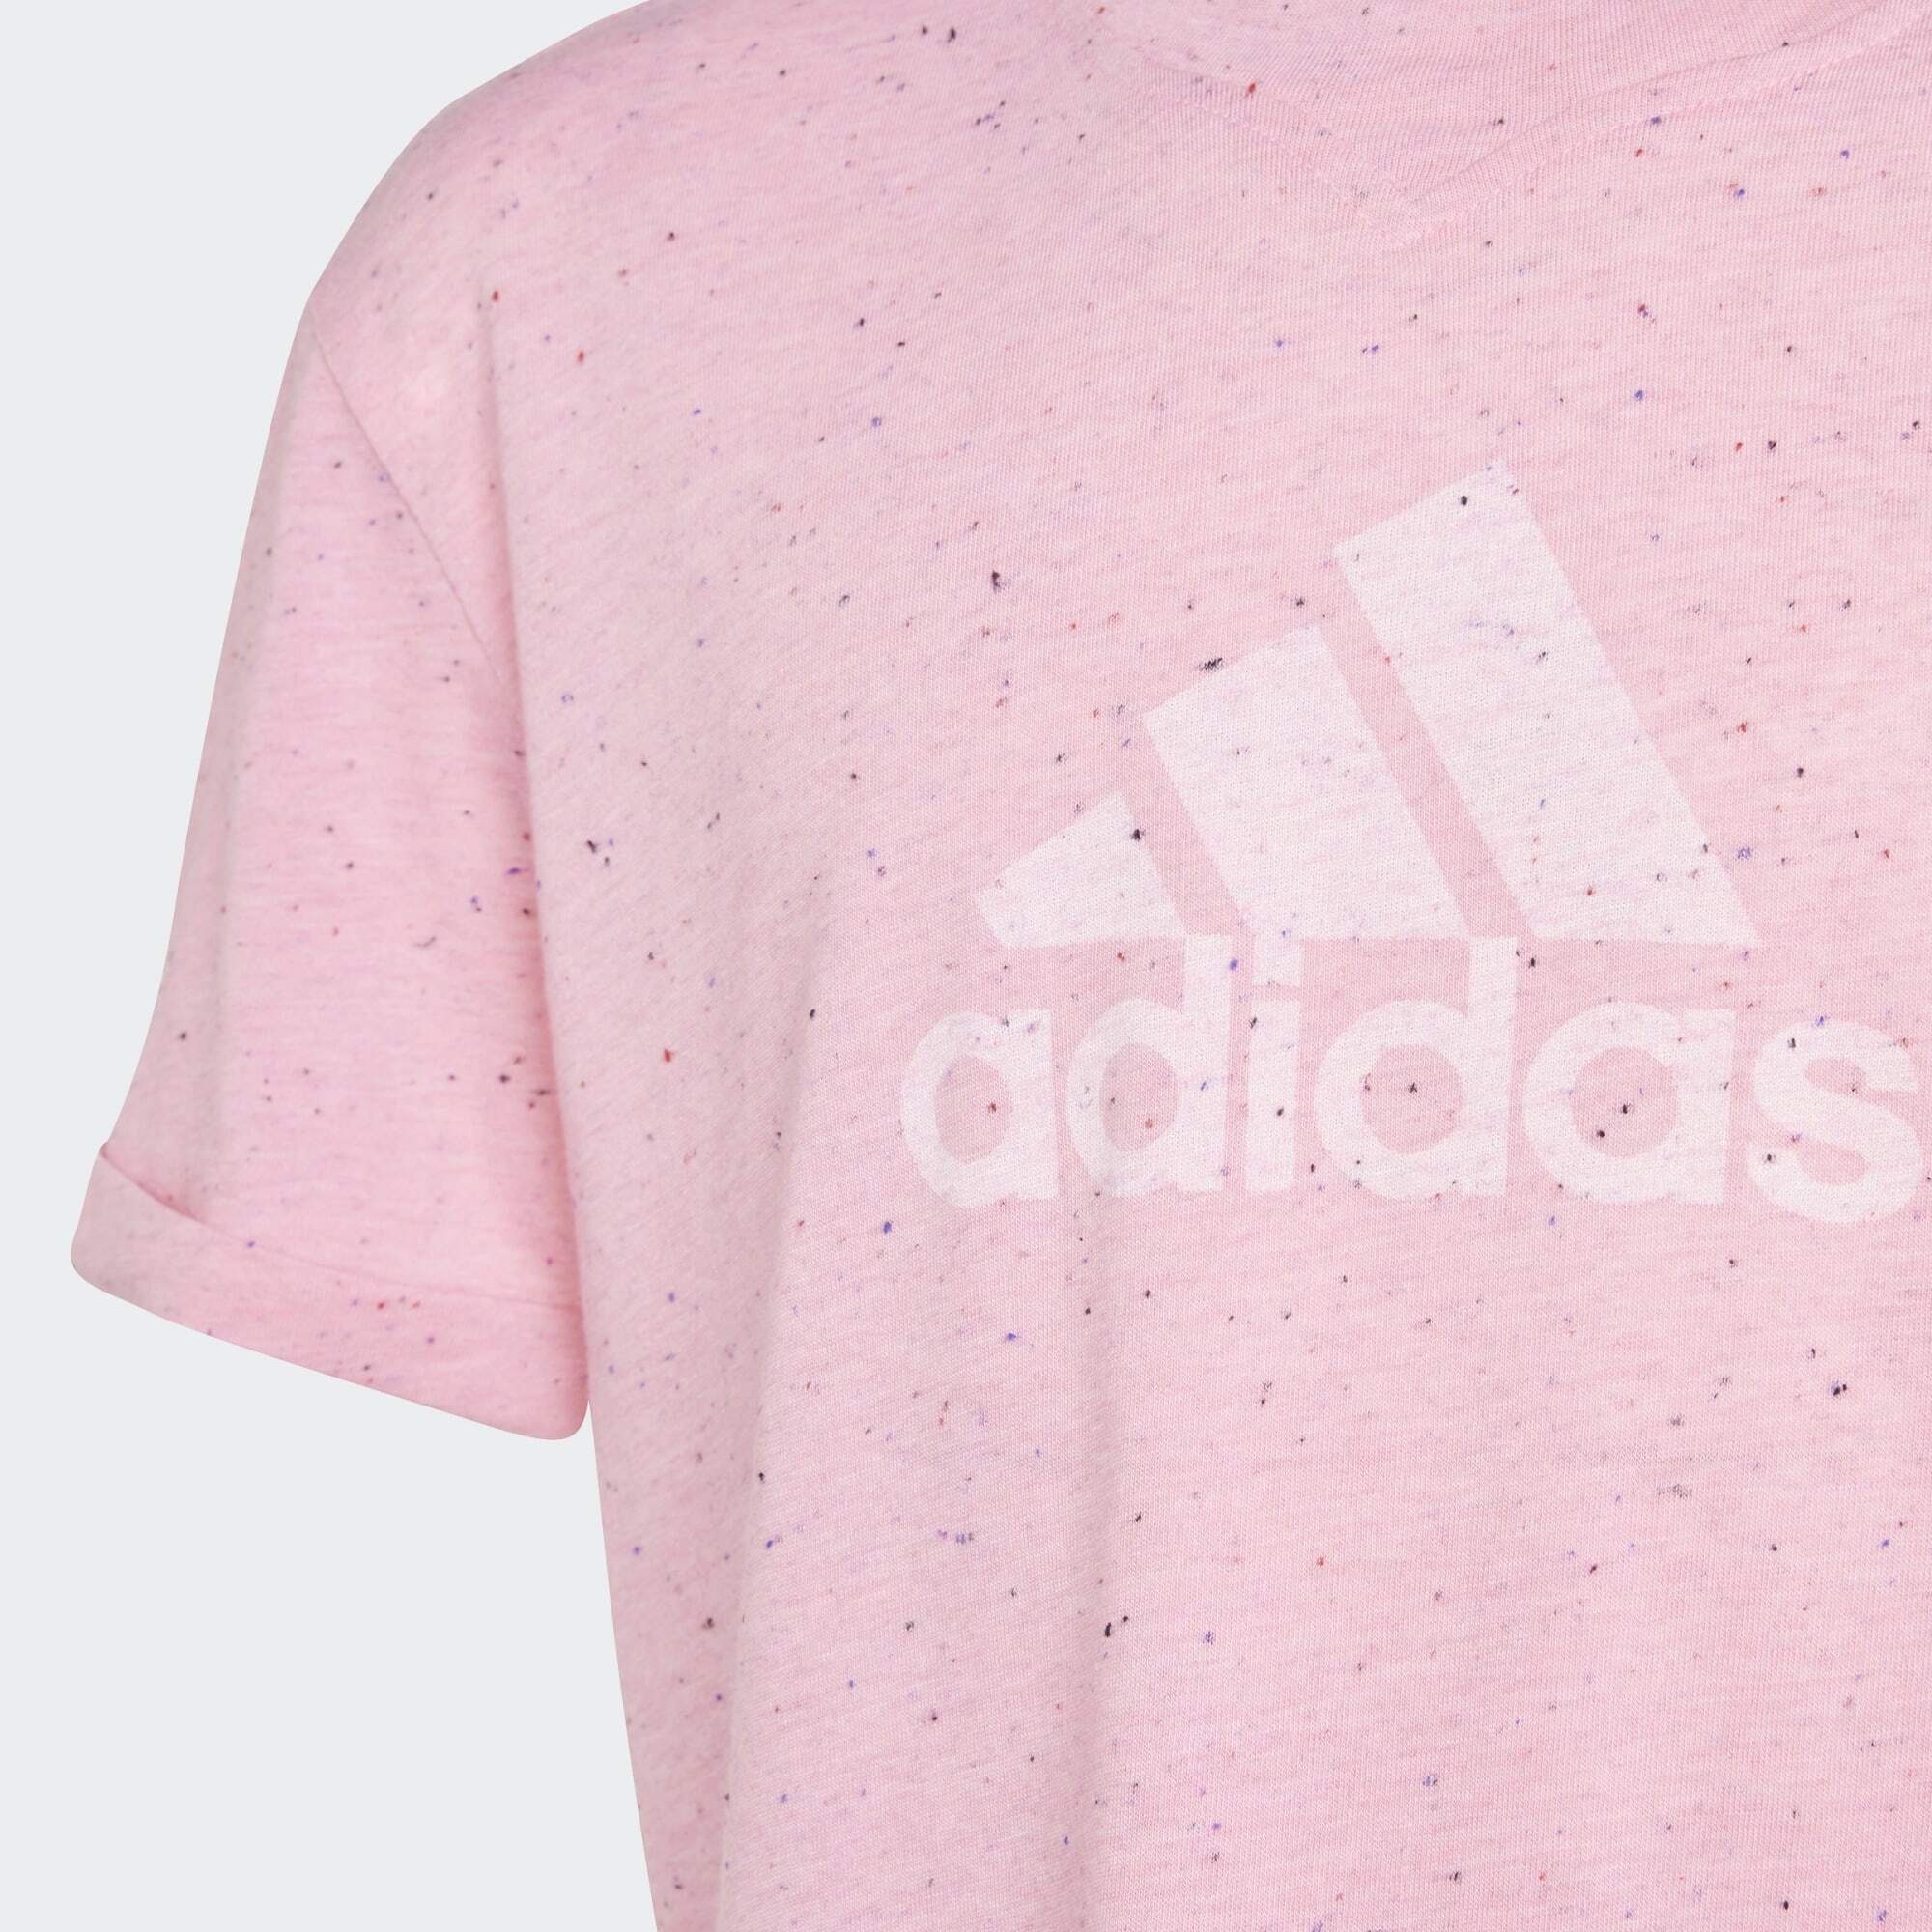 adidas Bliss Mel. / ICONS WINNERS T-SHIRT T-Shirt White Sportswear Pink FUTURE